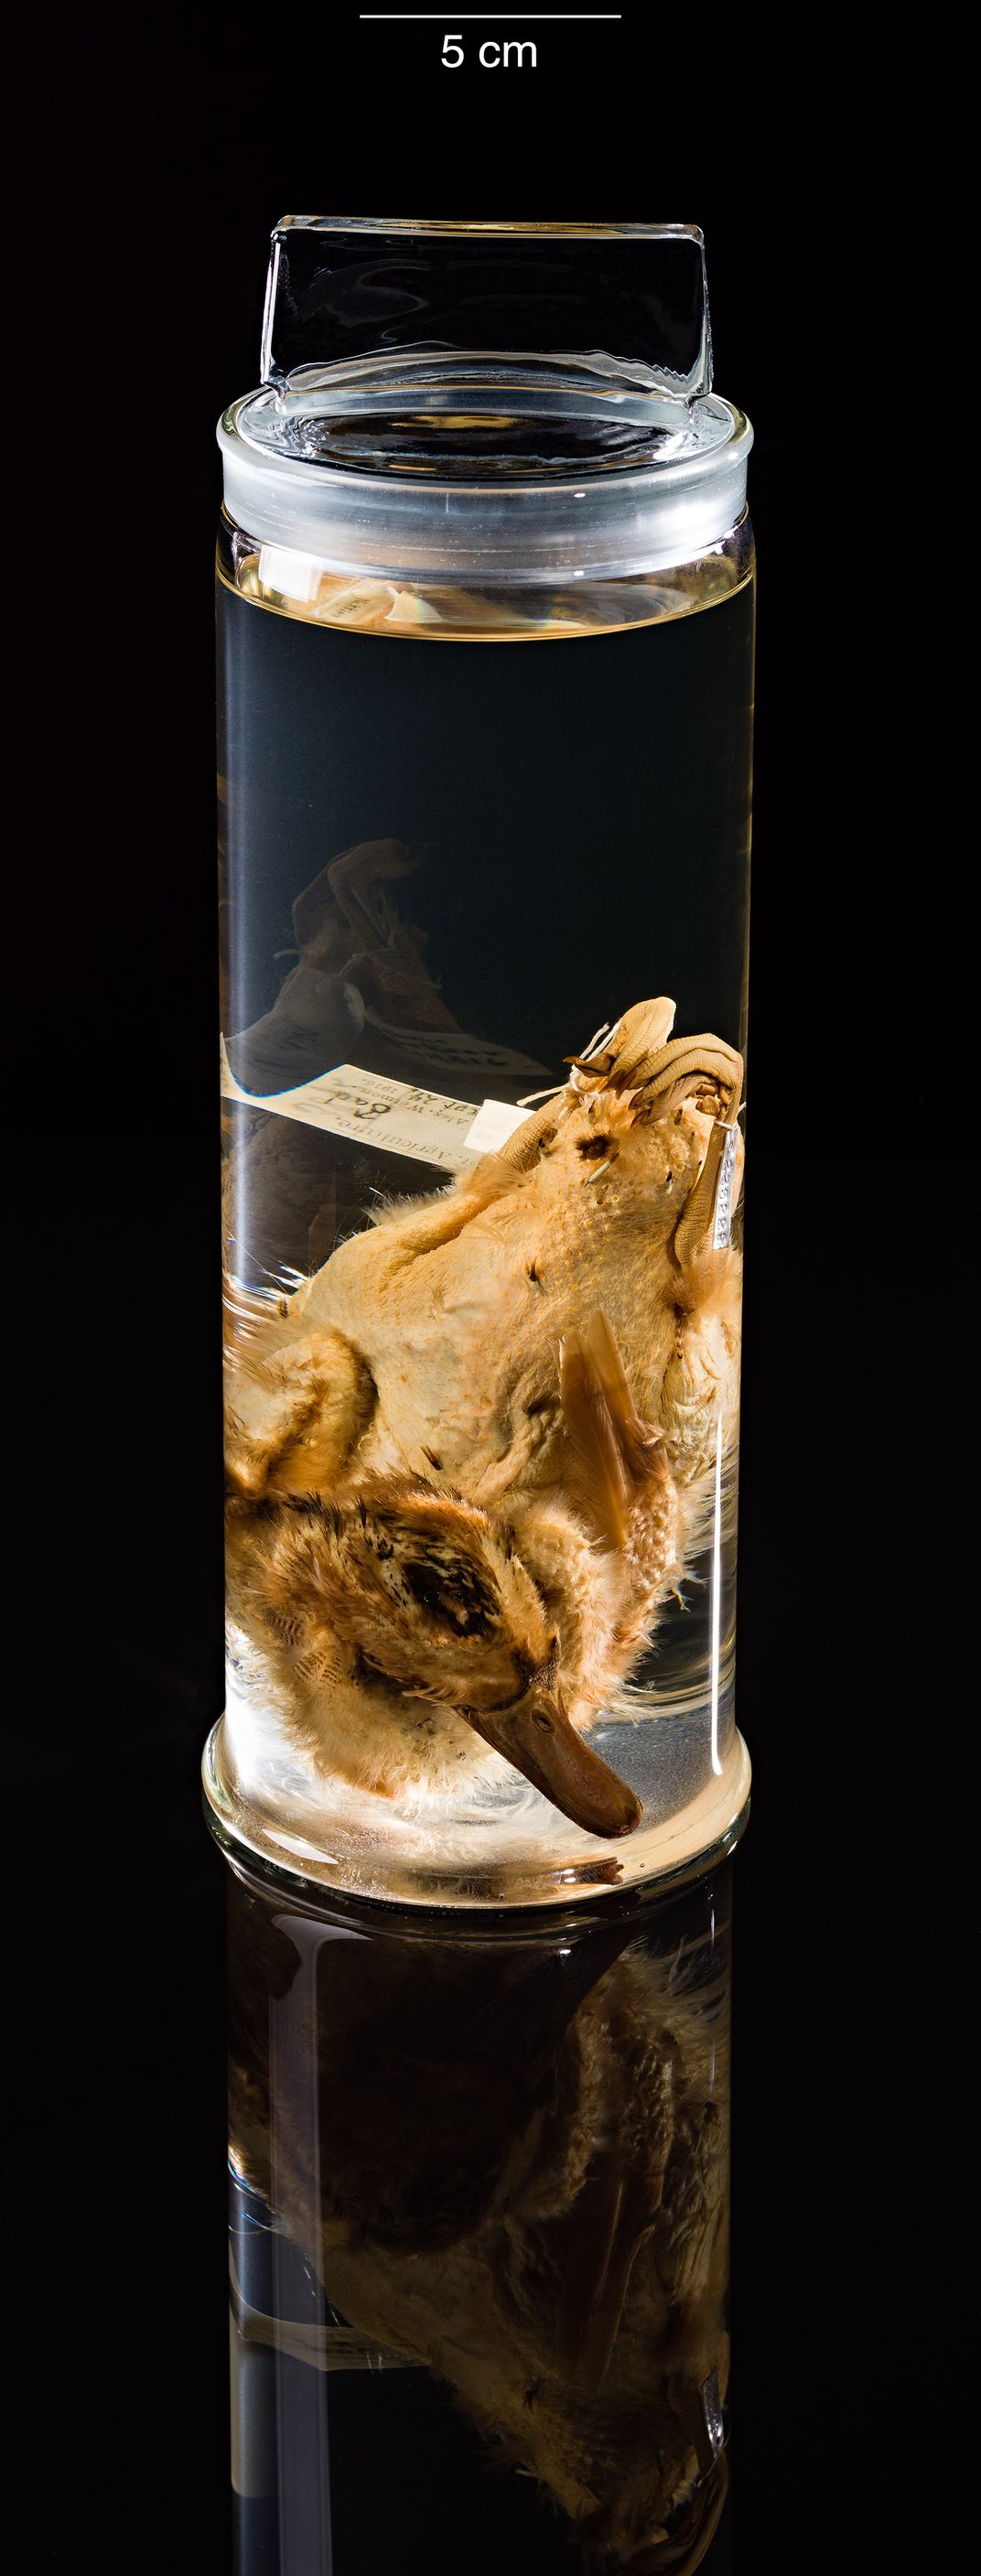 Jar with a beige bird preserved in fluid